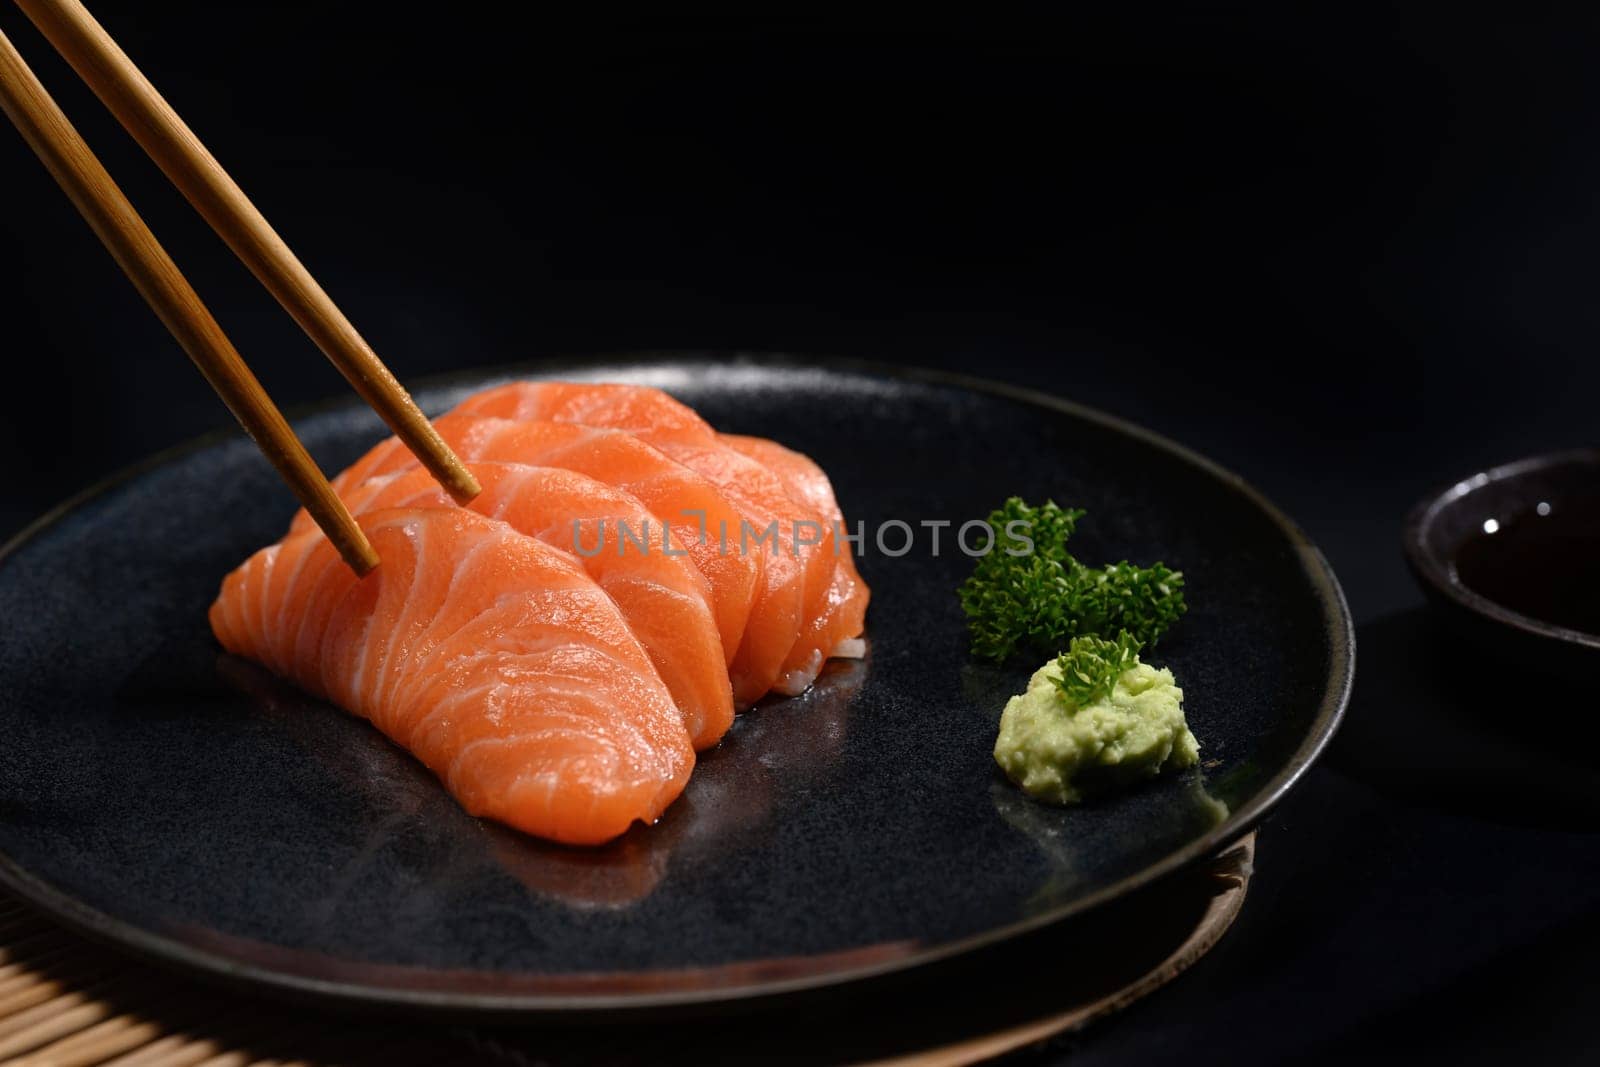 Fresh salmon sashimi on black plate with wasabi and parsley leaf. Japanese food style by prathanchorruangsak